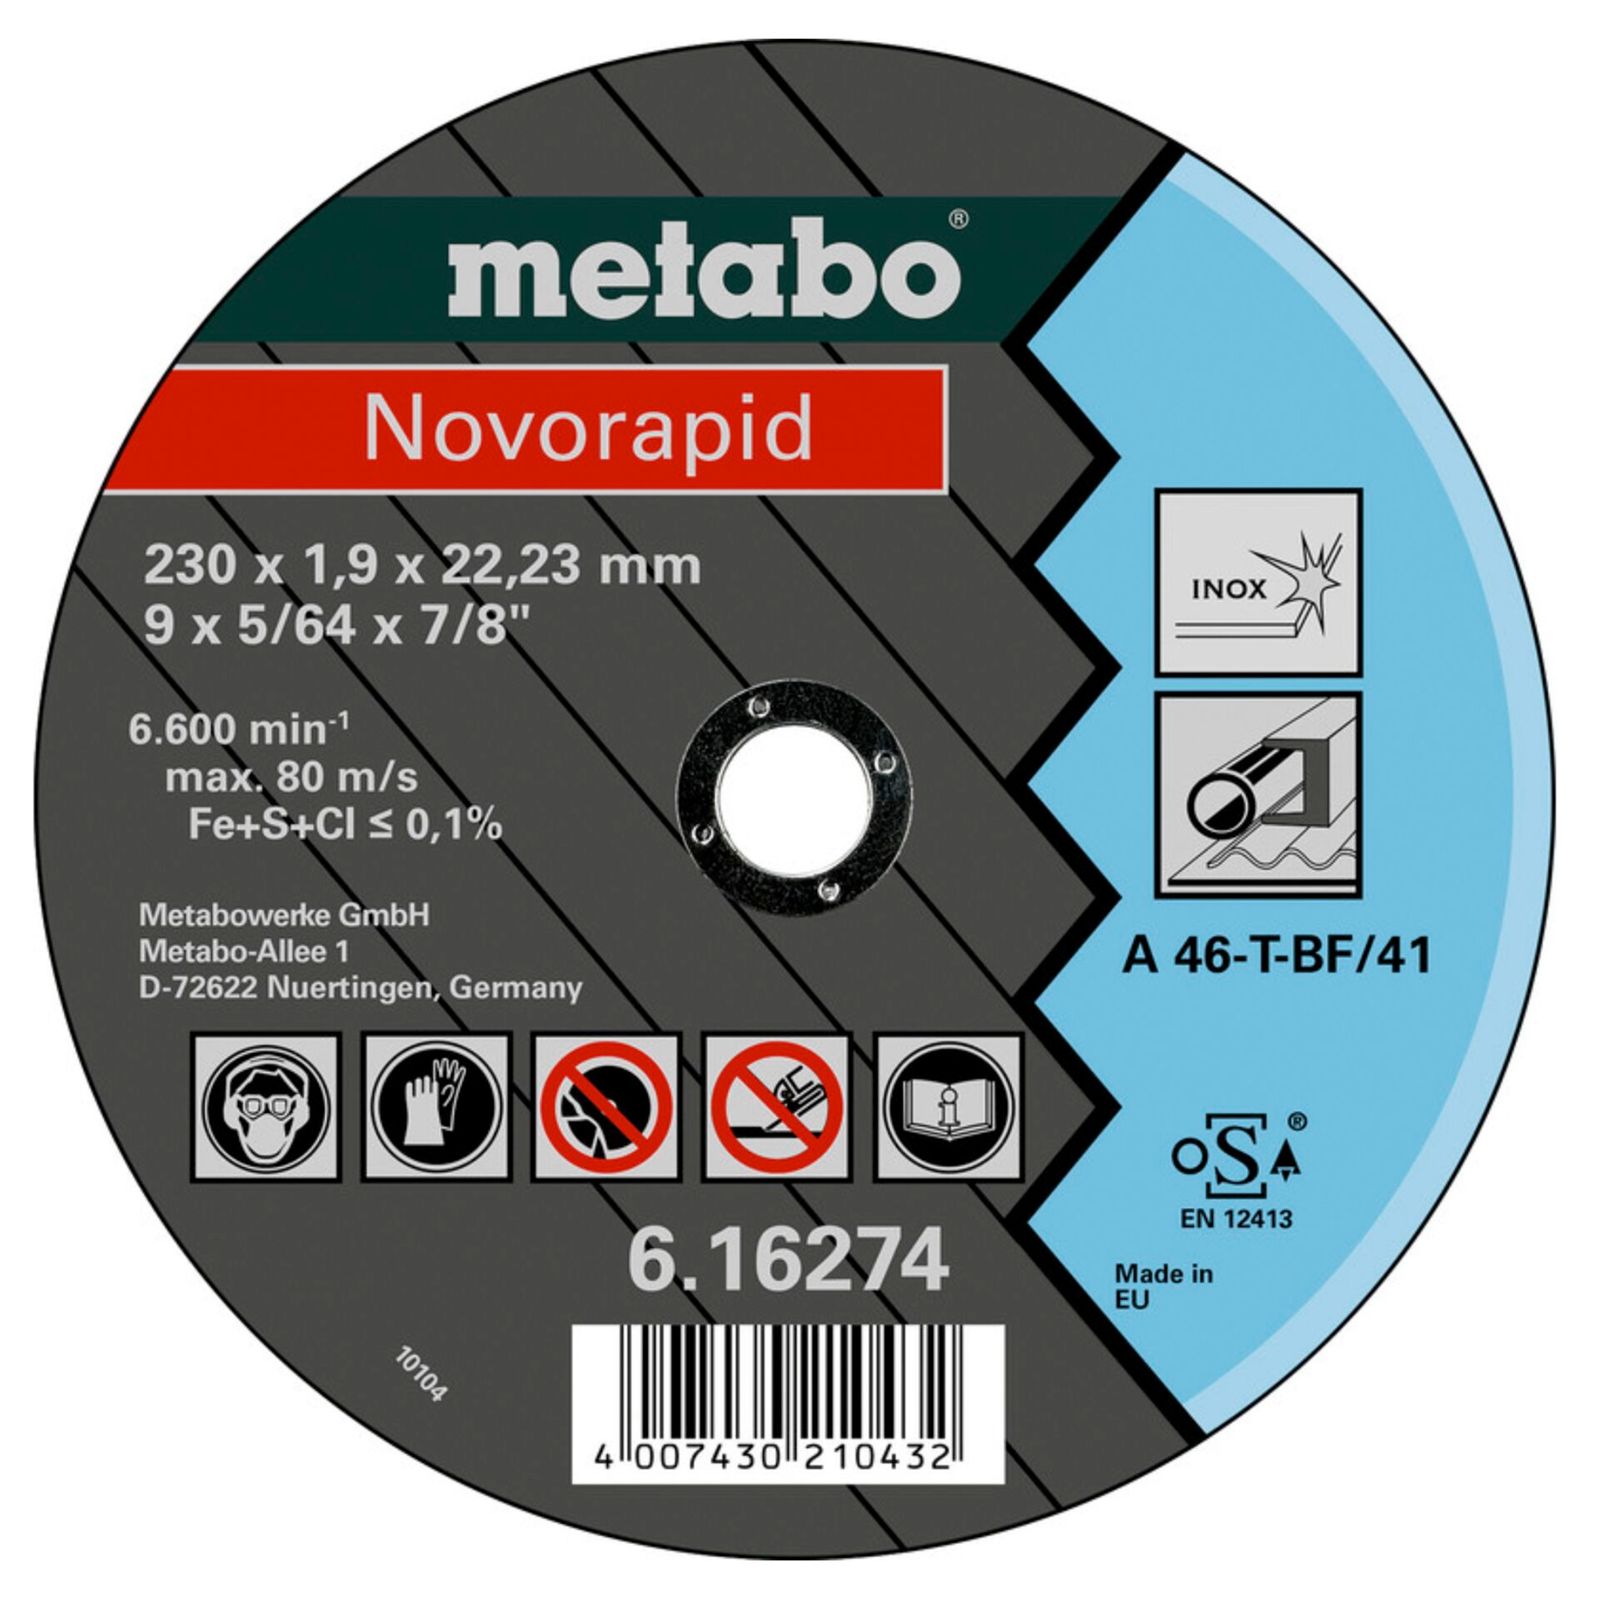 Metabo Novorapid 230x1,9x22,23 Inox